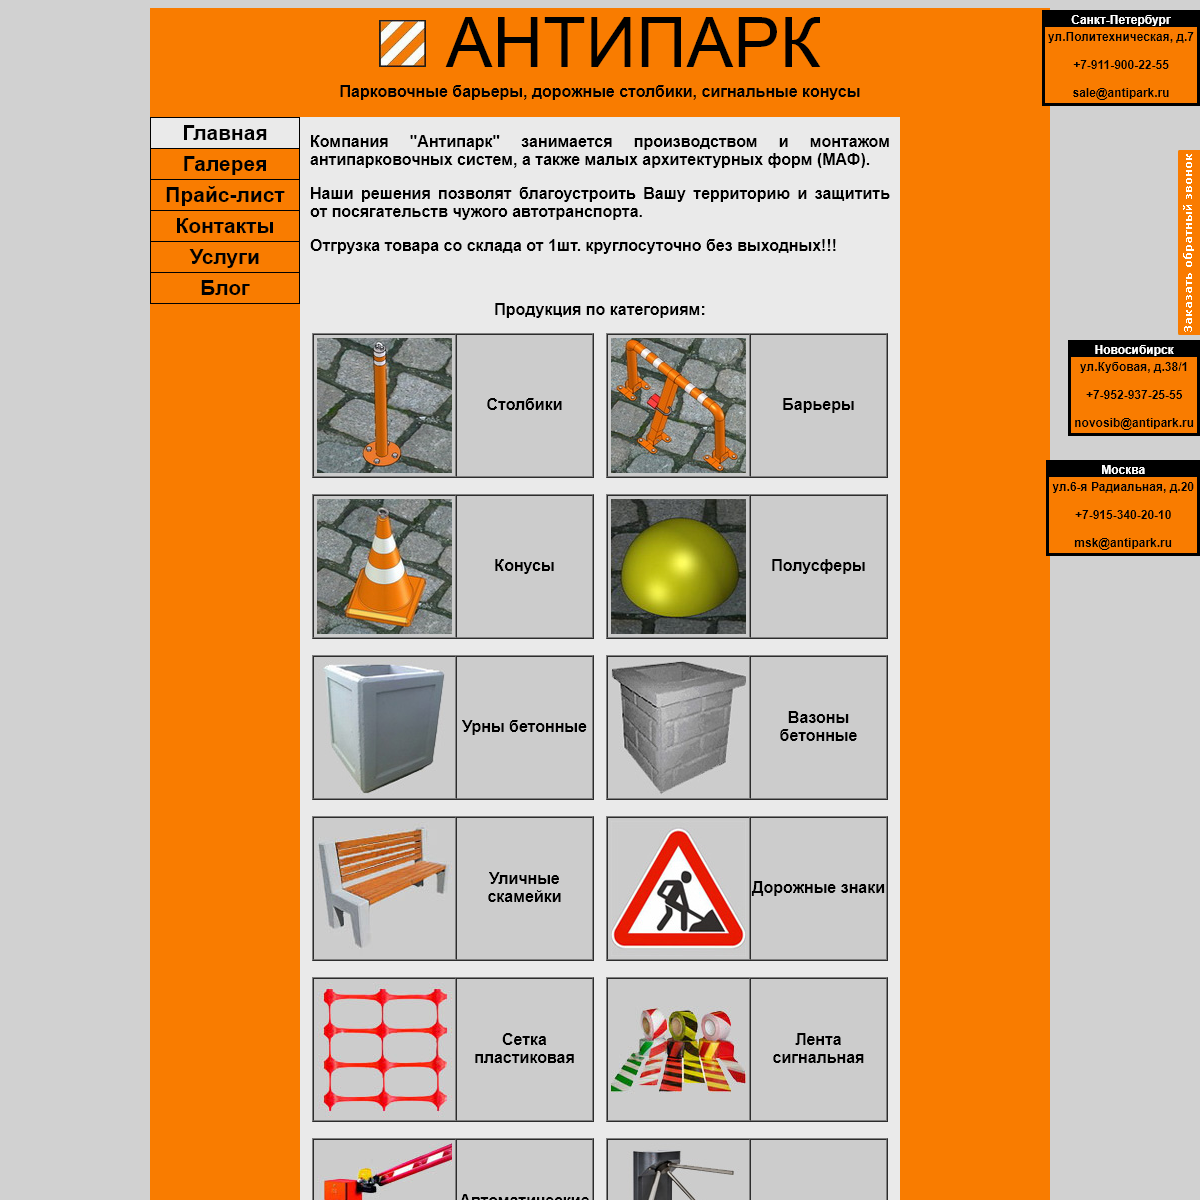 A complete backup of antipark.ru